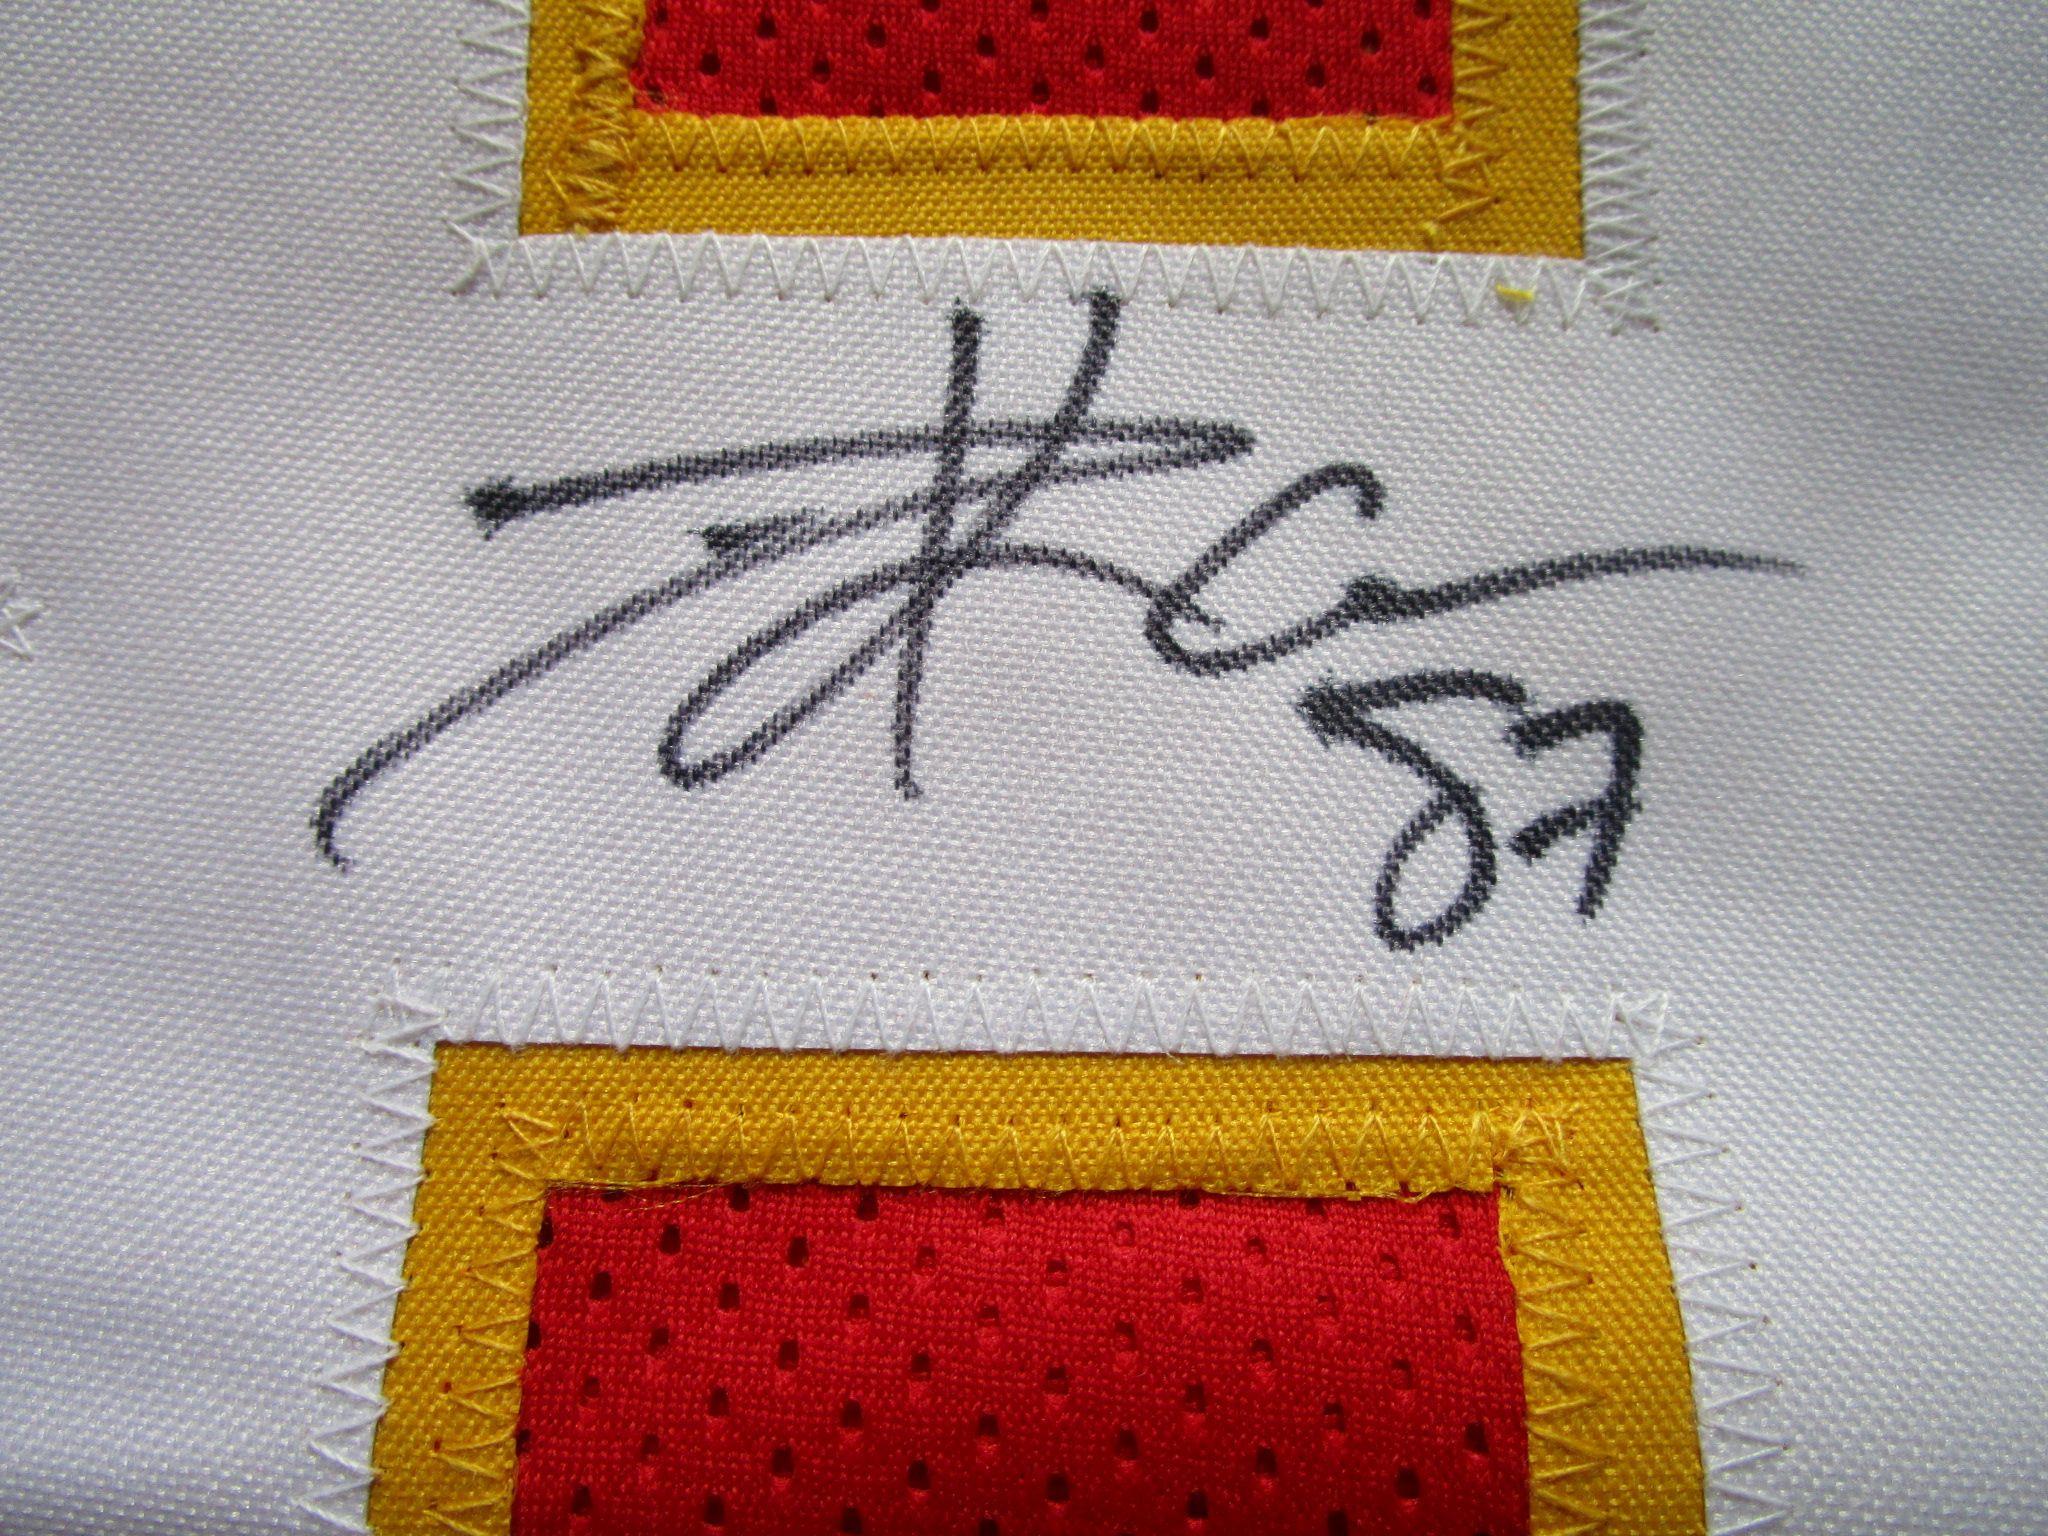 Travis Kelce, Kansas City Chiefs, 4 Time All Pro, Autographed Jersey w COA